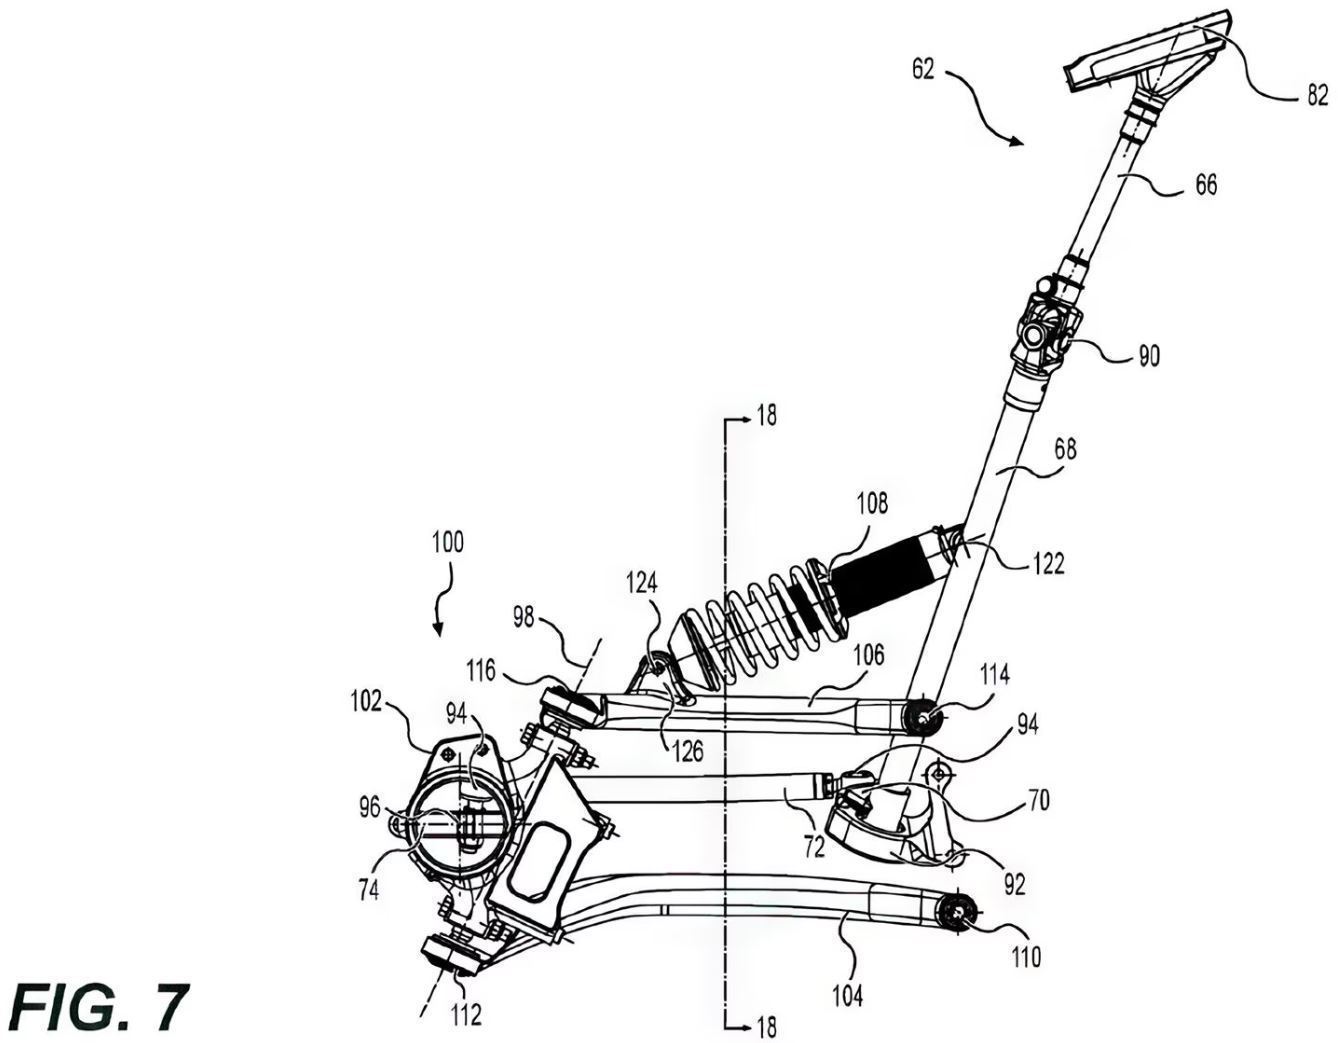 canam hub patent 7